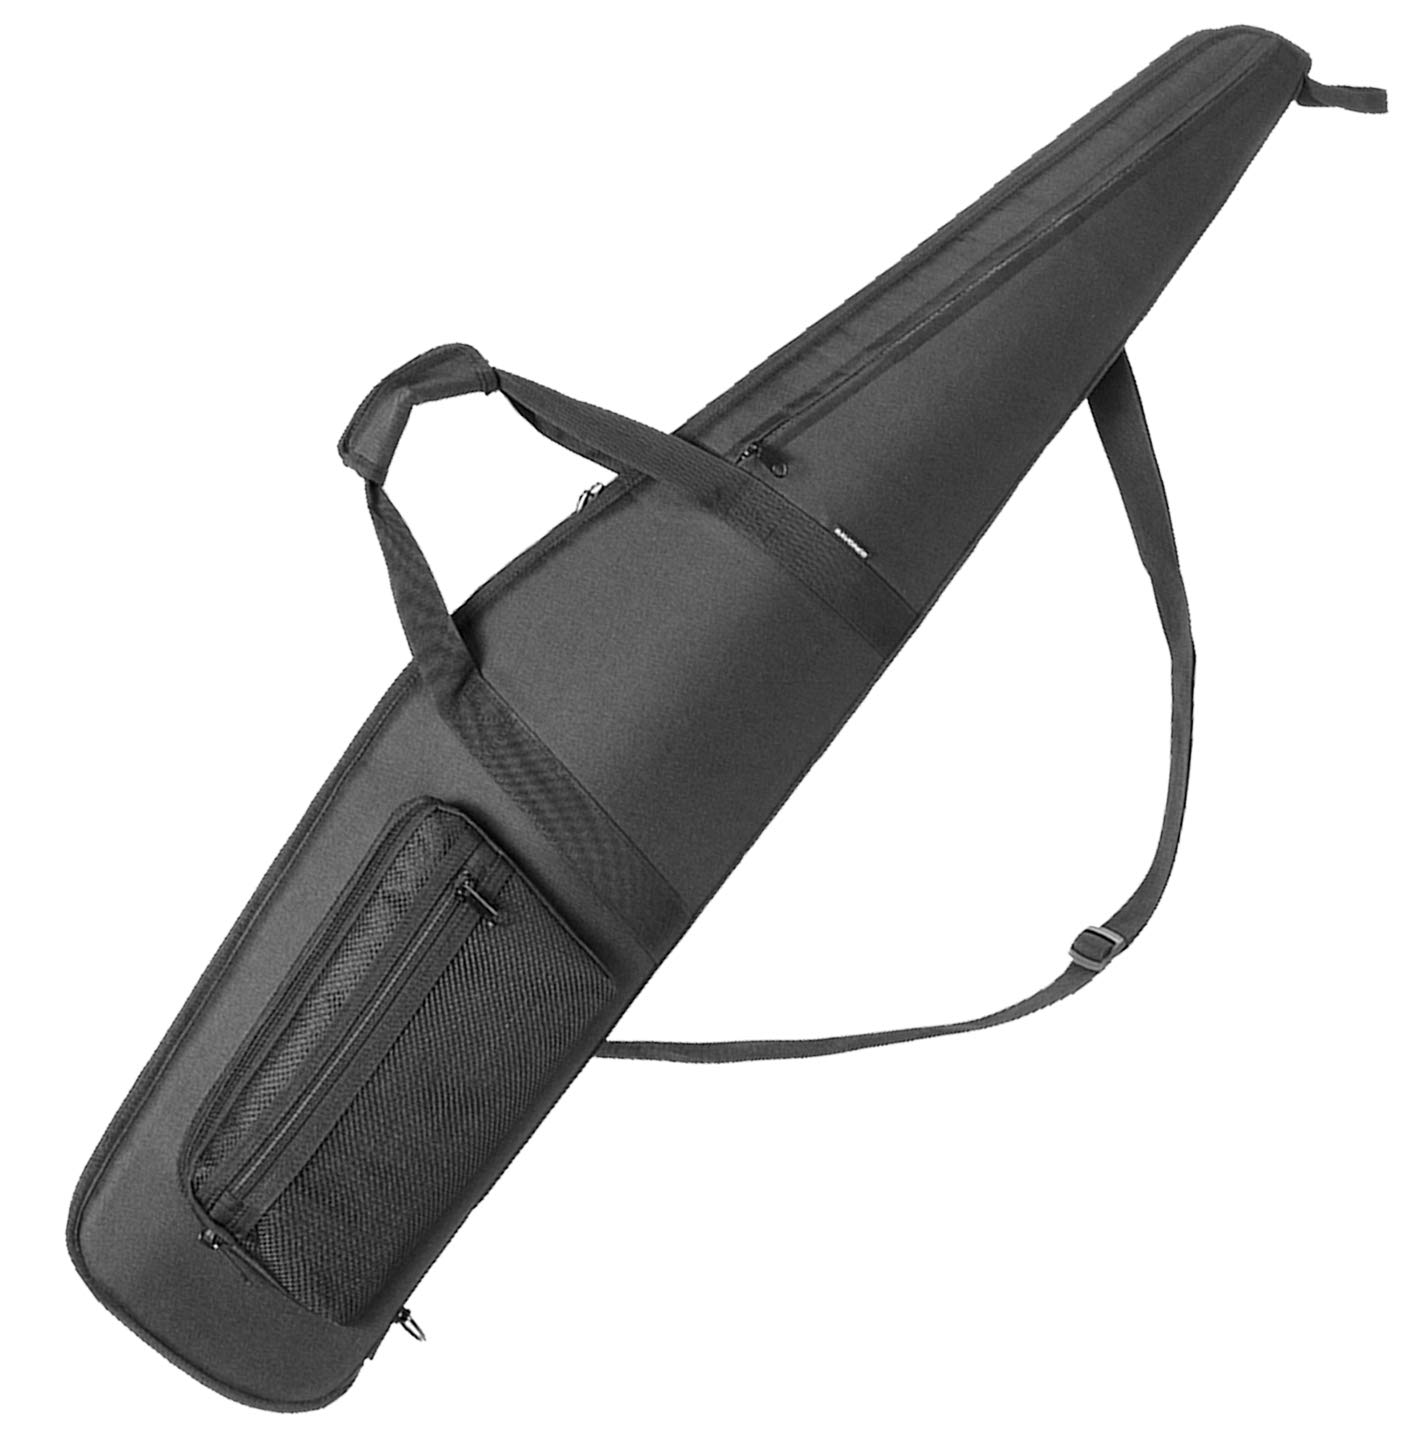 RAVOINcc Rifle case Soft Shotgun cases - Water Resistant gun carry Bag for Scoped Rifles with 3 Accessory Pockets Adjustable Sho